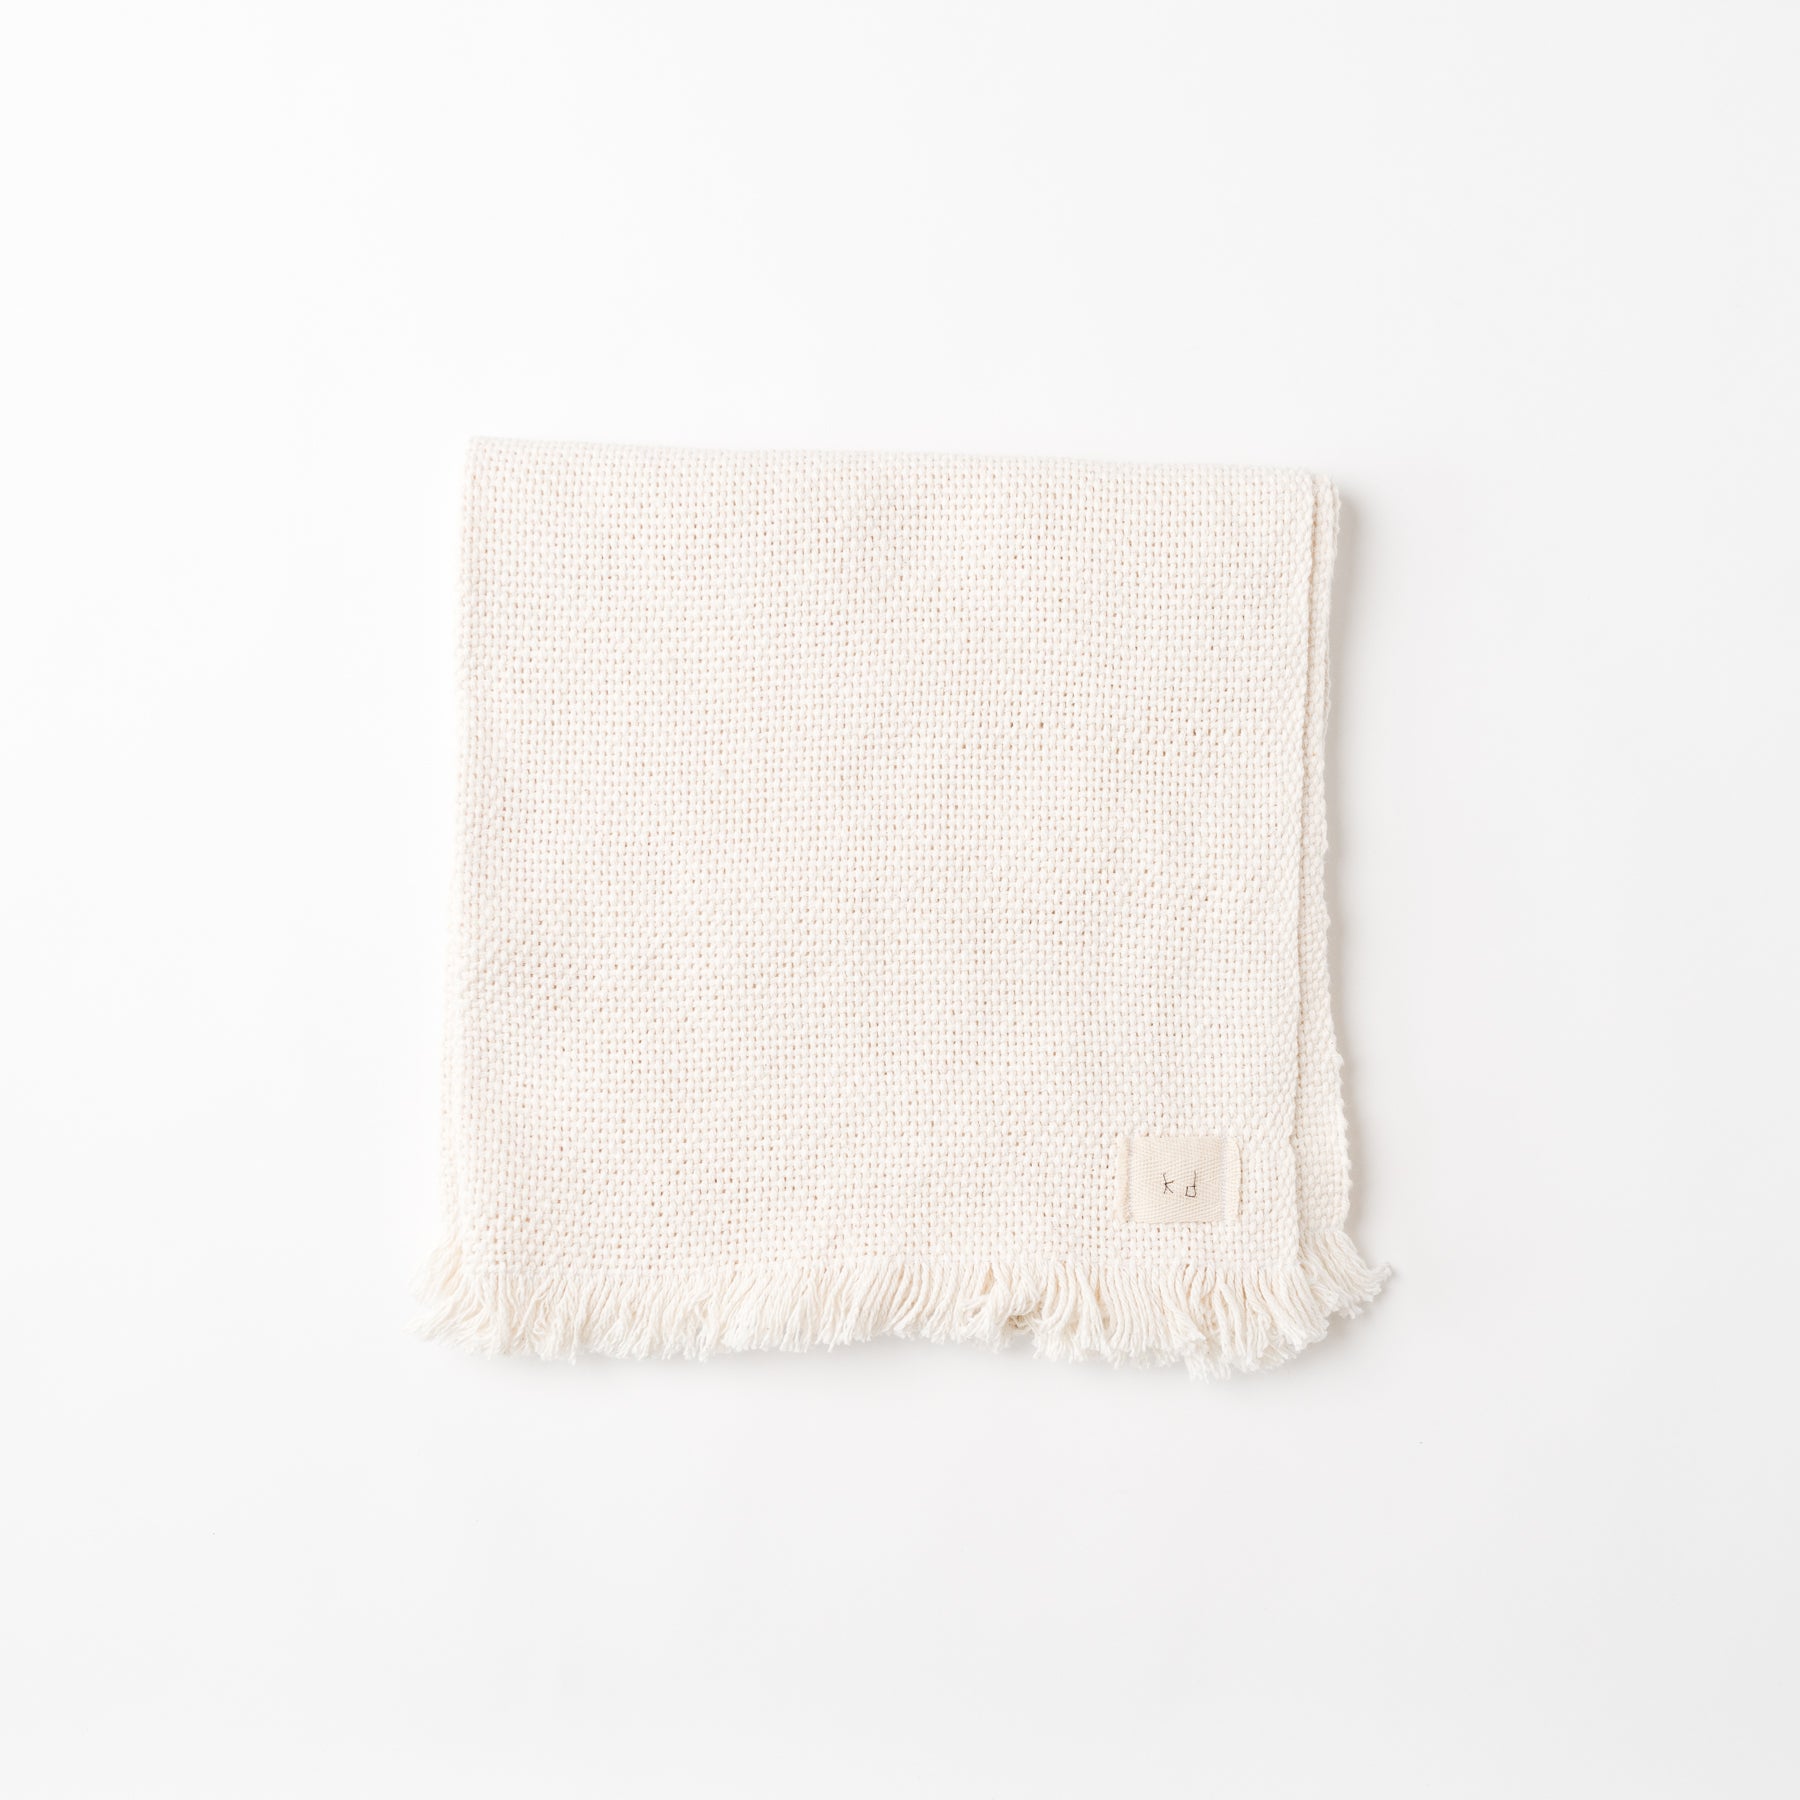 KD Weave Large Towel, Cream